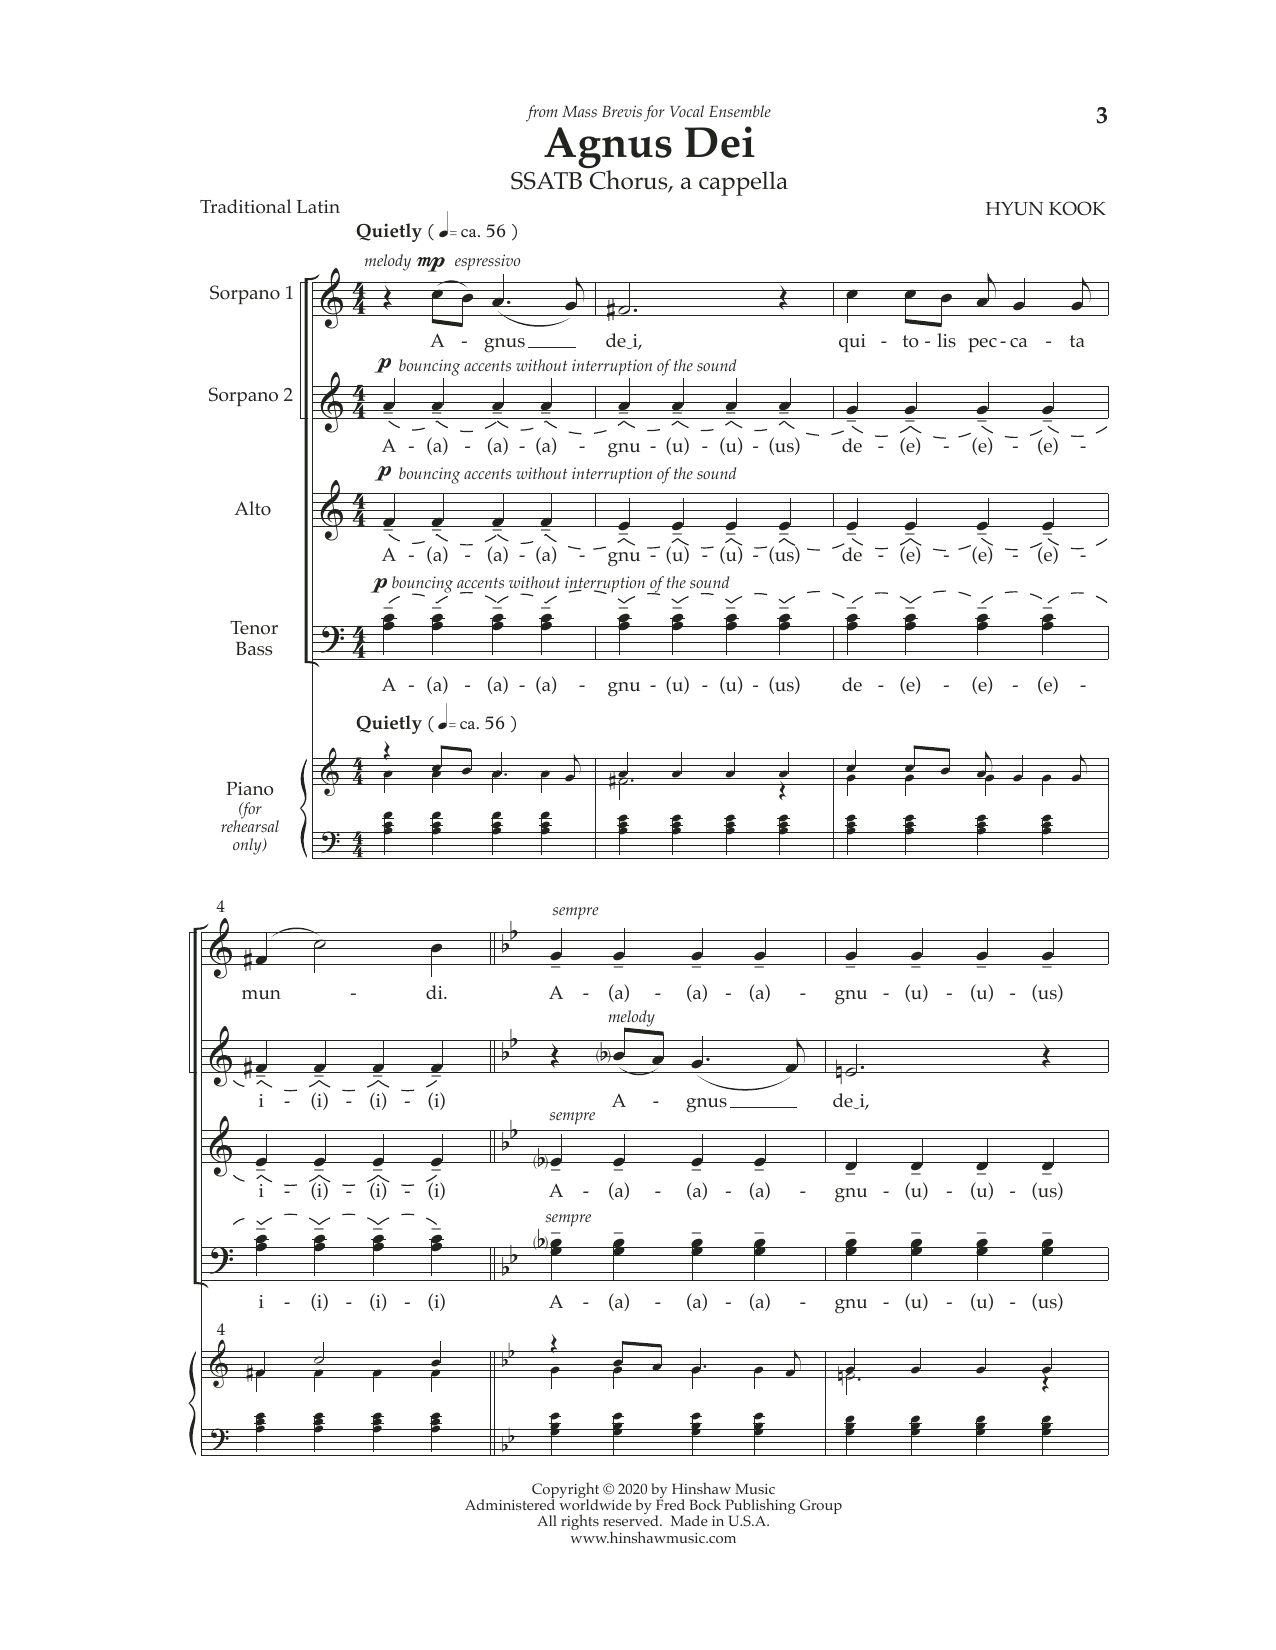 Download Hyun Kook Agnus Dei Sheet Music and learn how to play SATB Choir PDF digital score in minutes